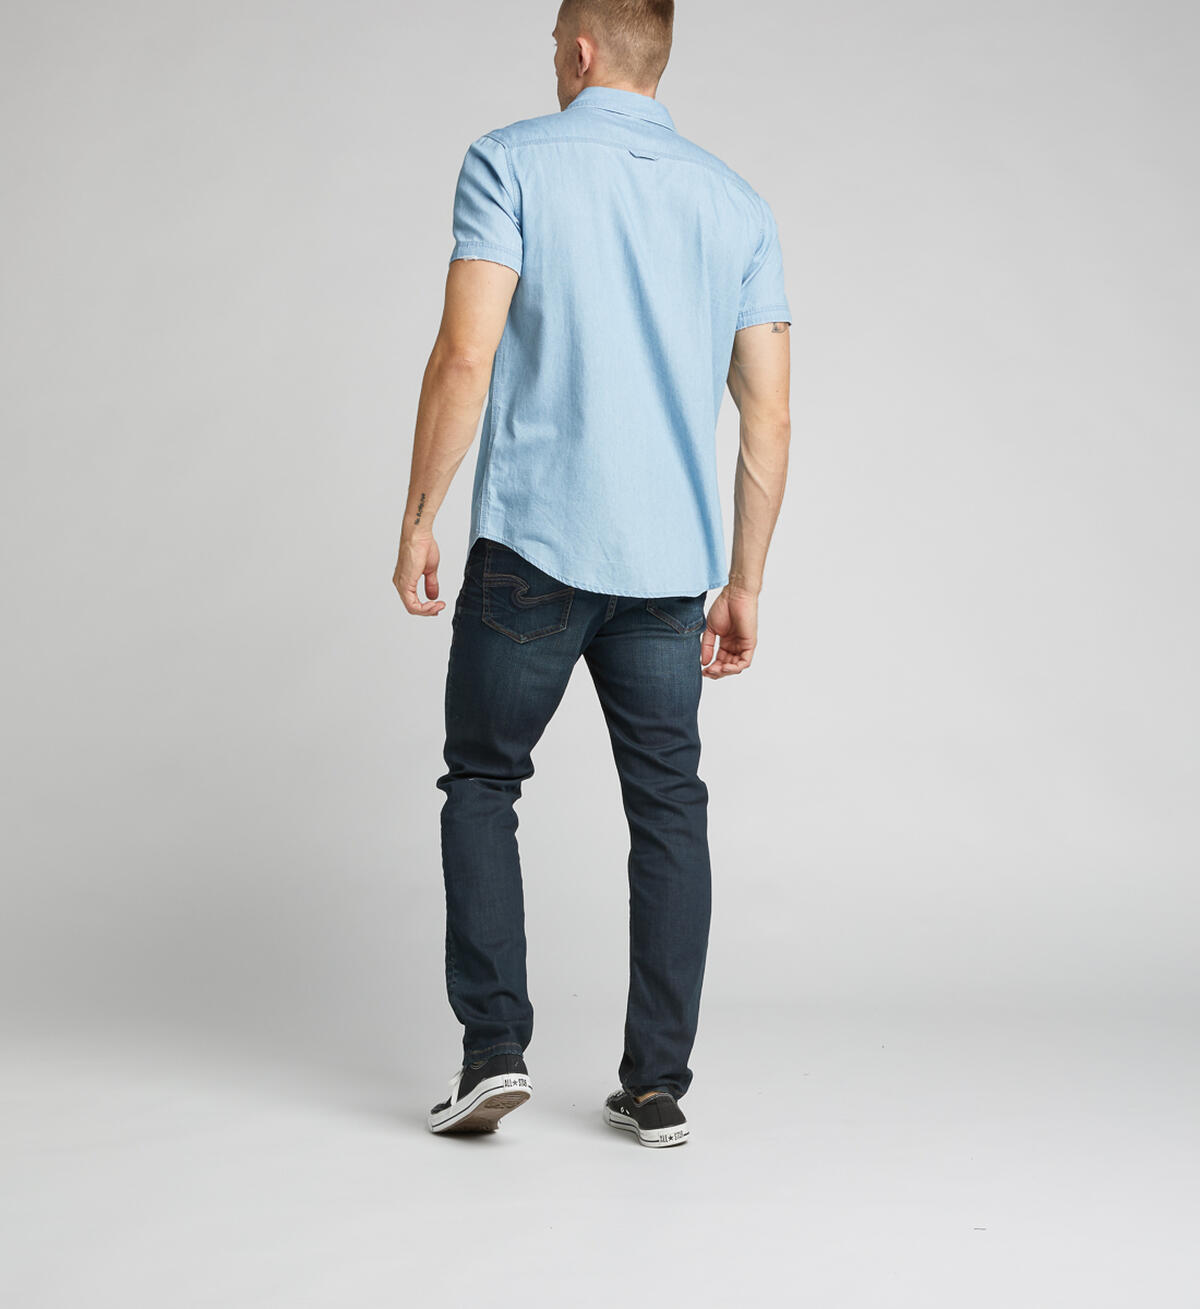 Calden Short-Sleeve Classic Shirt, , hi-res image number 2